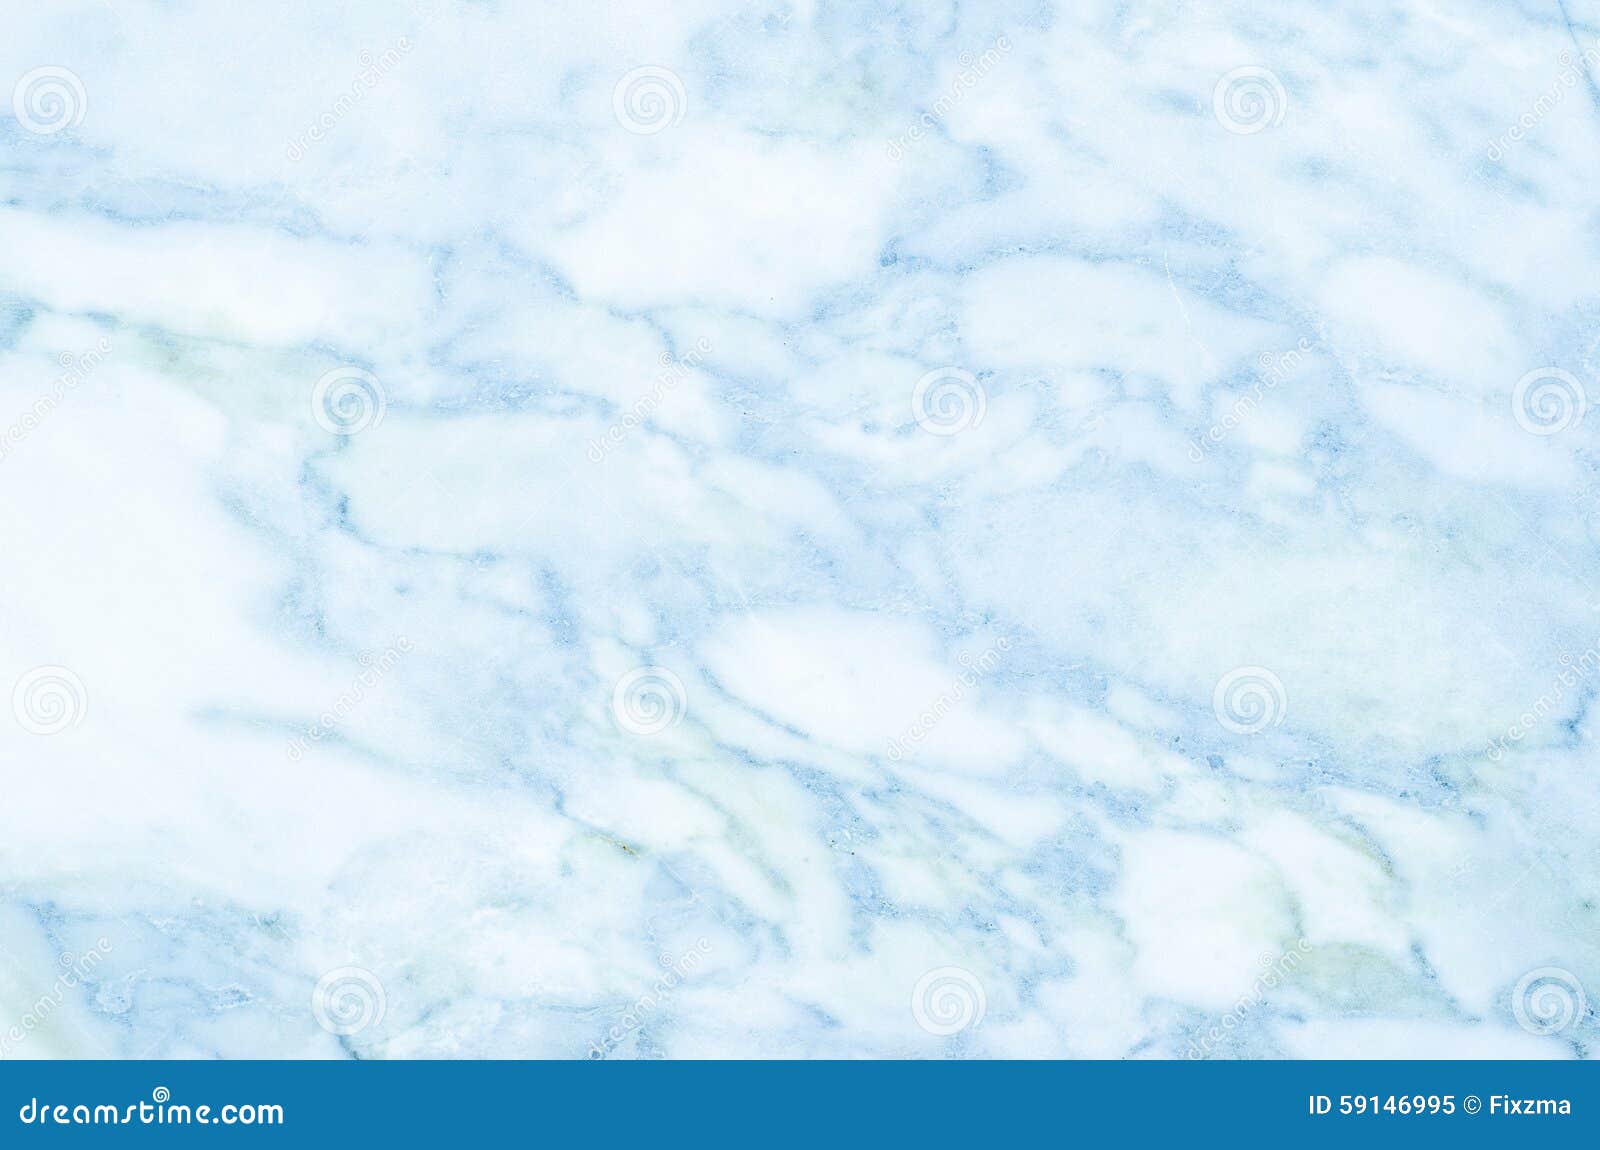 Blue Marble Texture Background Stock Photo Megapixl